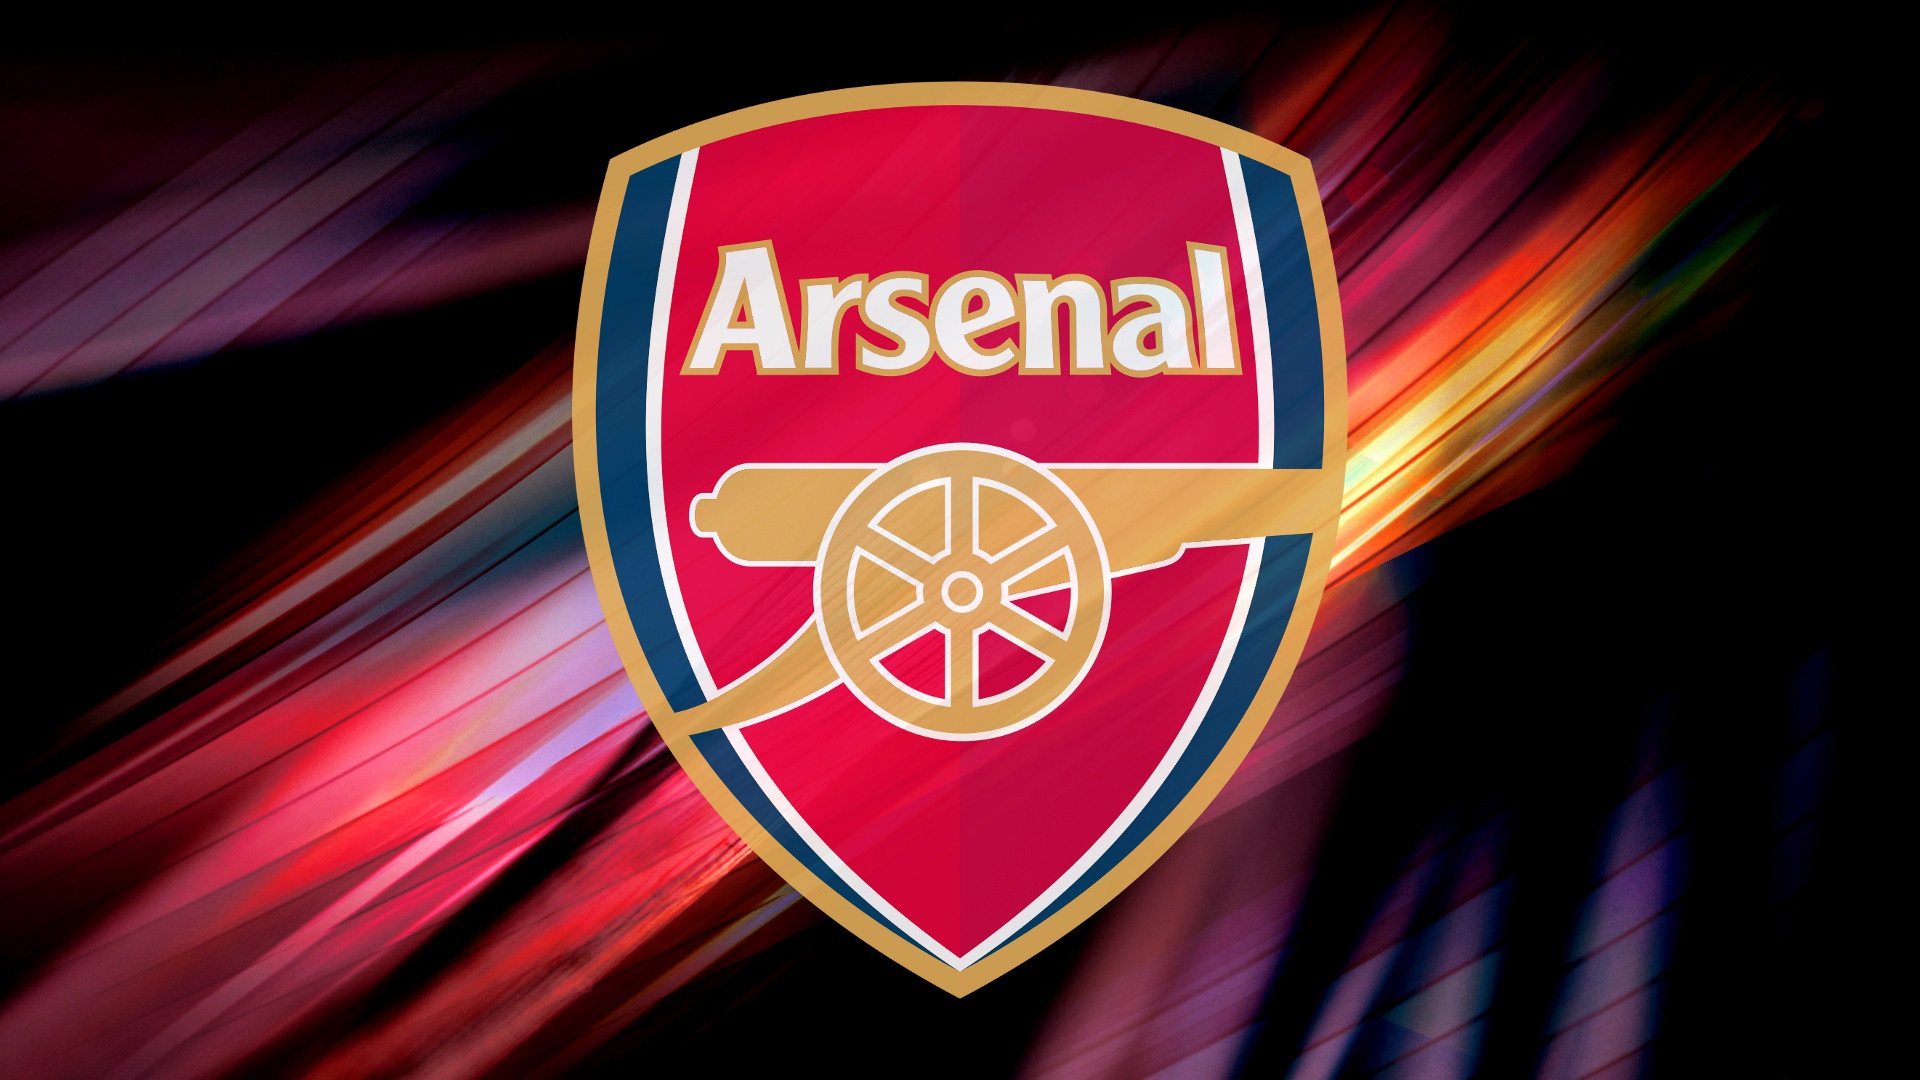 Arsenal Wallpaper Hd 2021 / Arsenal Fc 1080P, 2K, 4K, 5K HD wallpapers